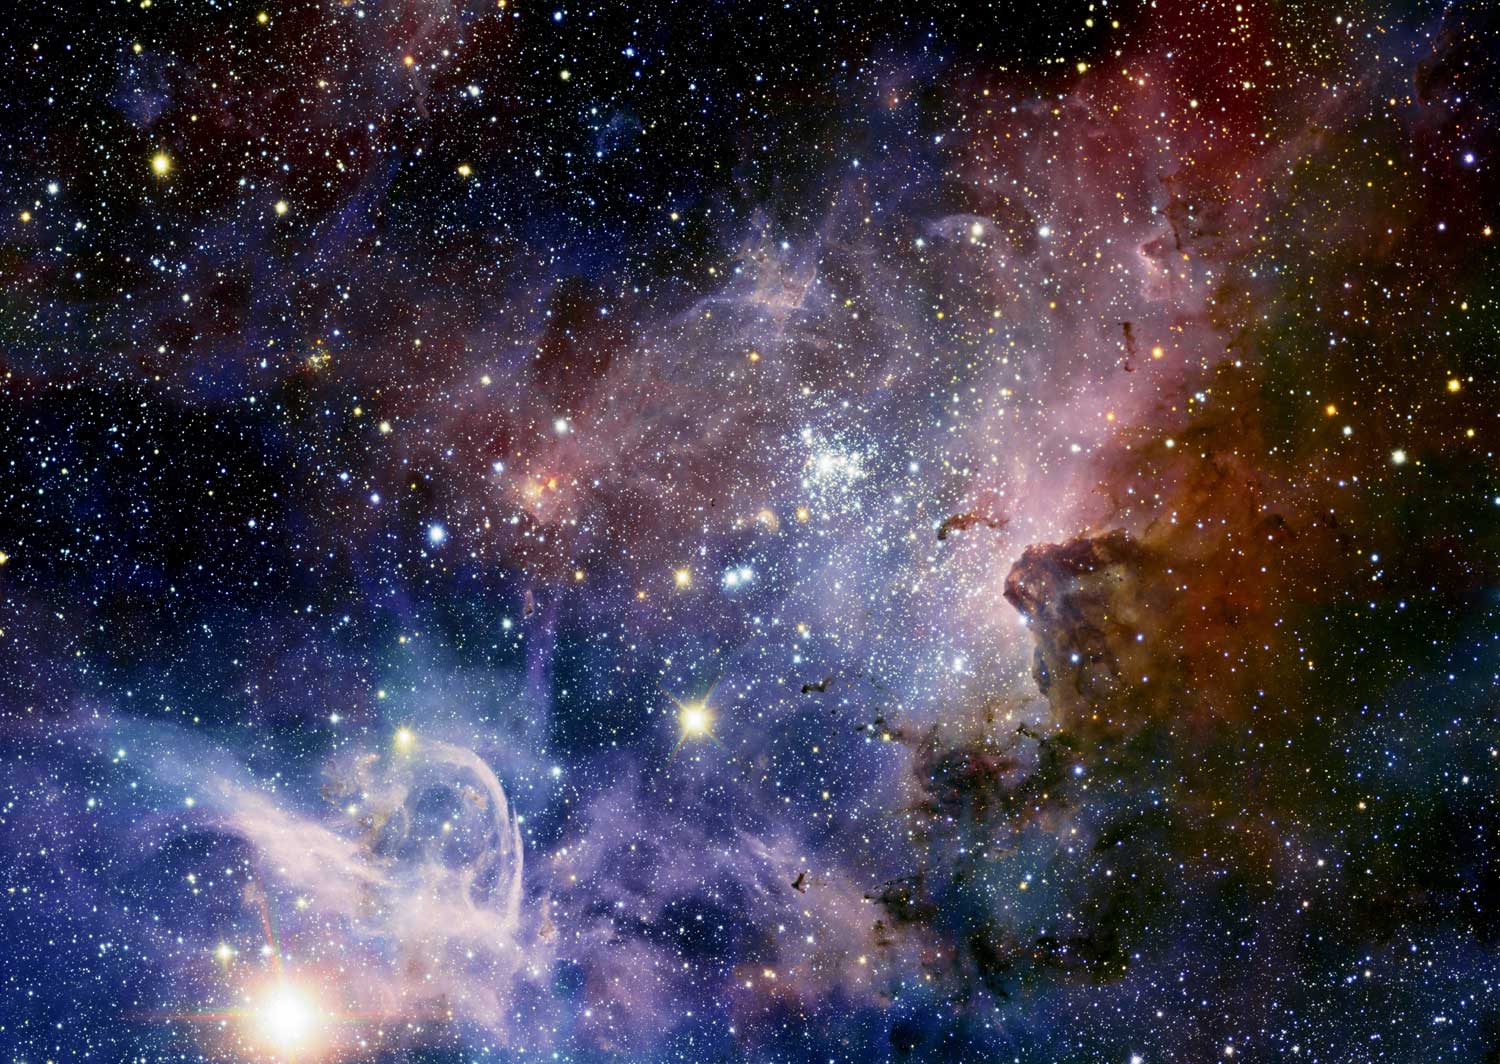 Puzzle Enjoy Nebulosa de Carina de 1000 Piezas